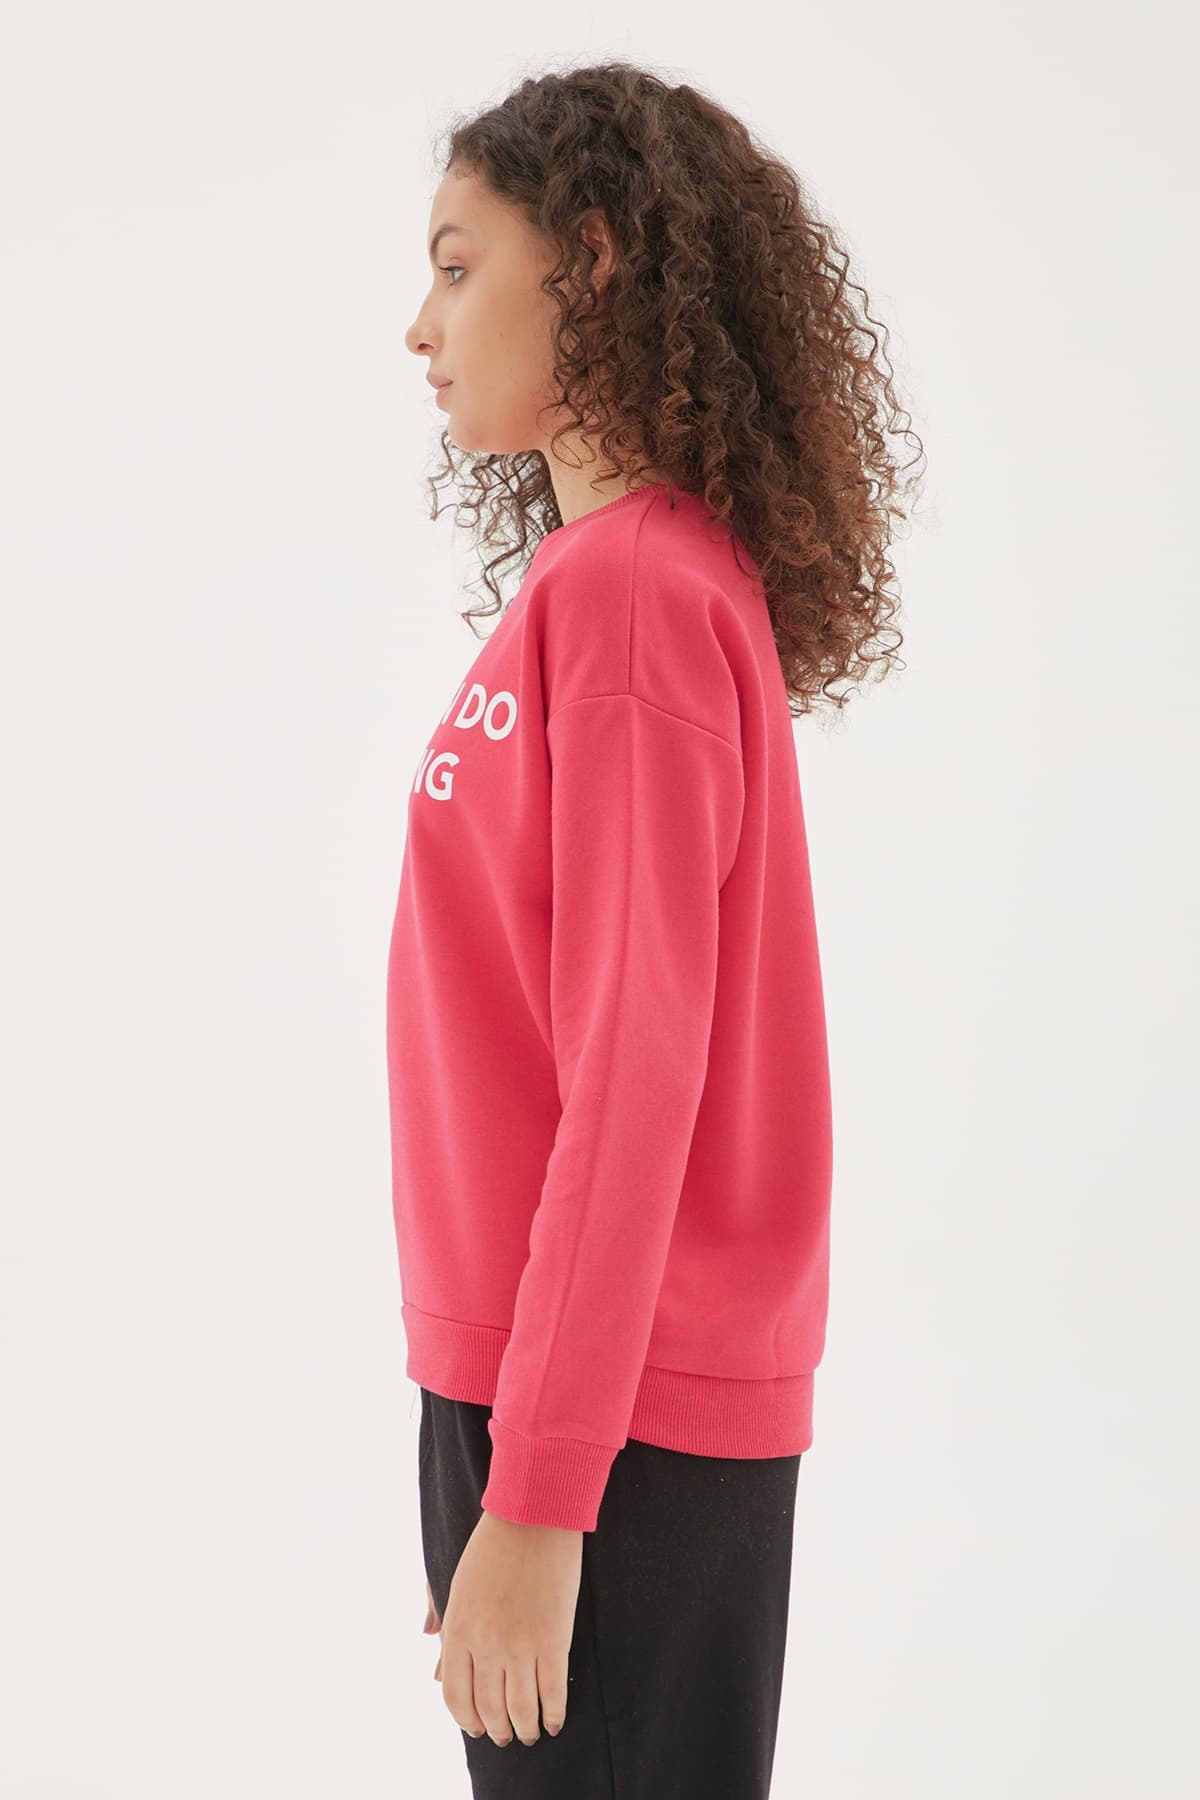 Baskılı Sweatshirt Fuşya / Fuchsia | Fashion Friends